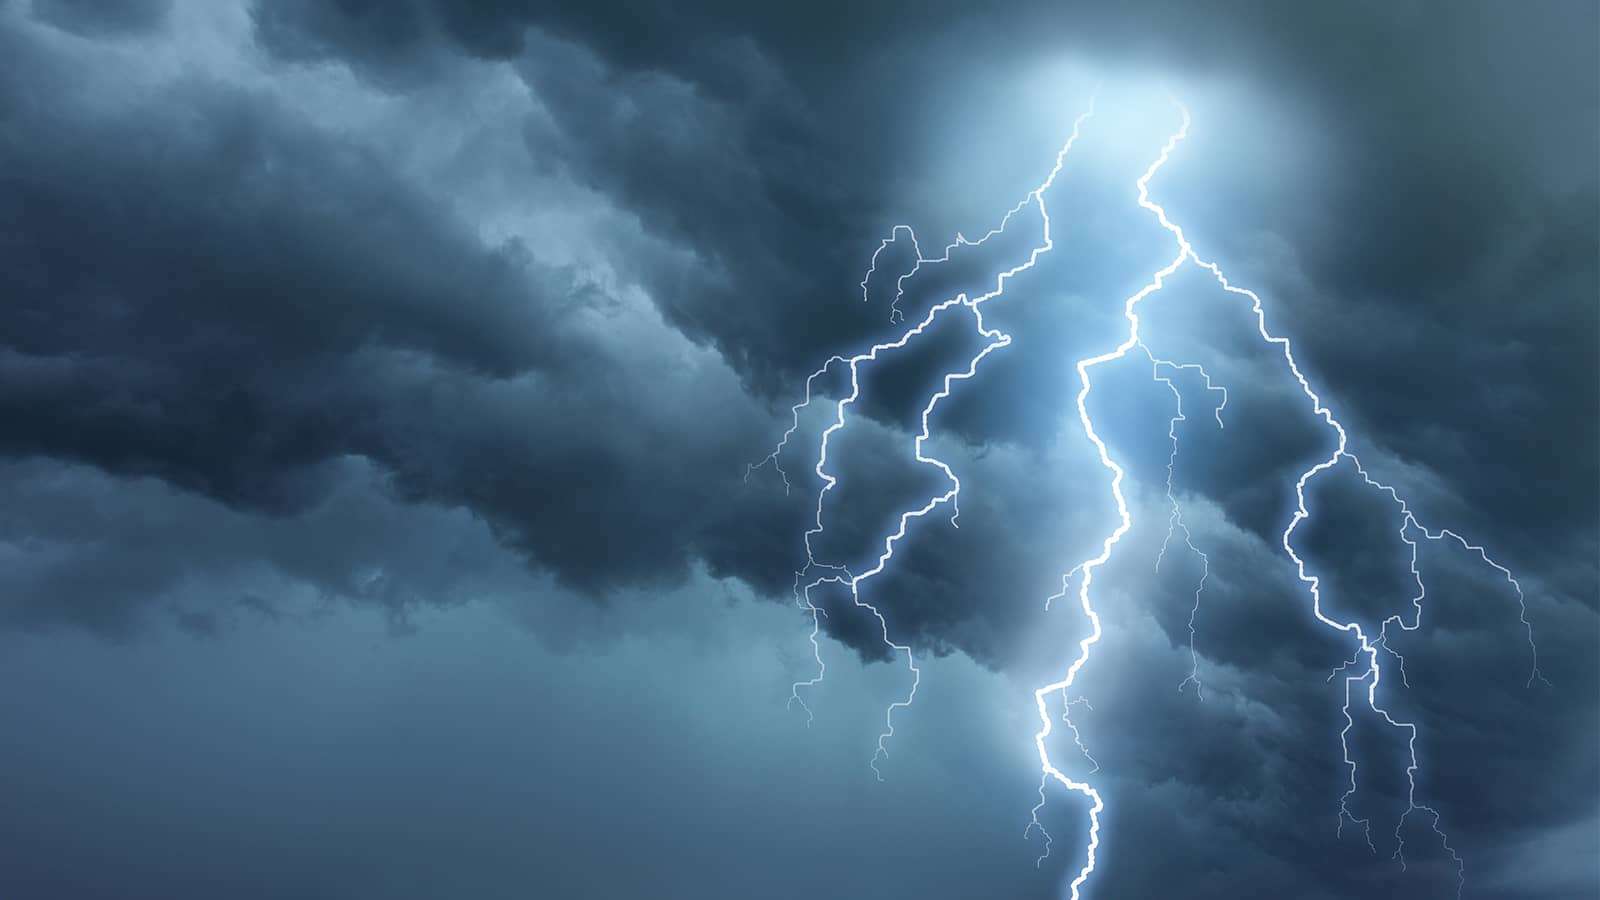 lightning bolt in storm clouds